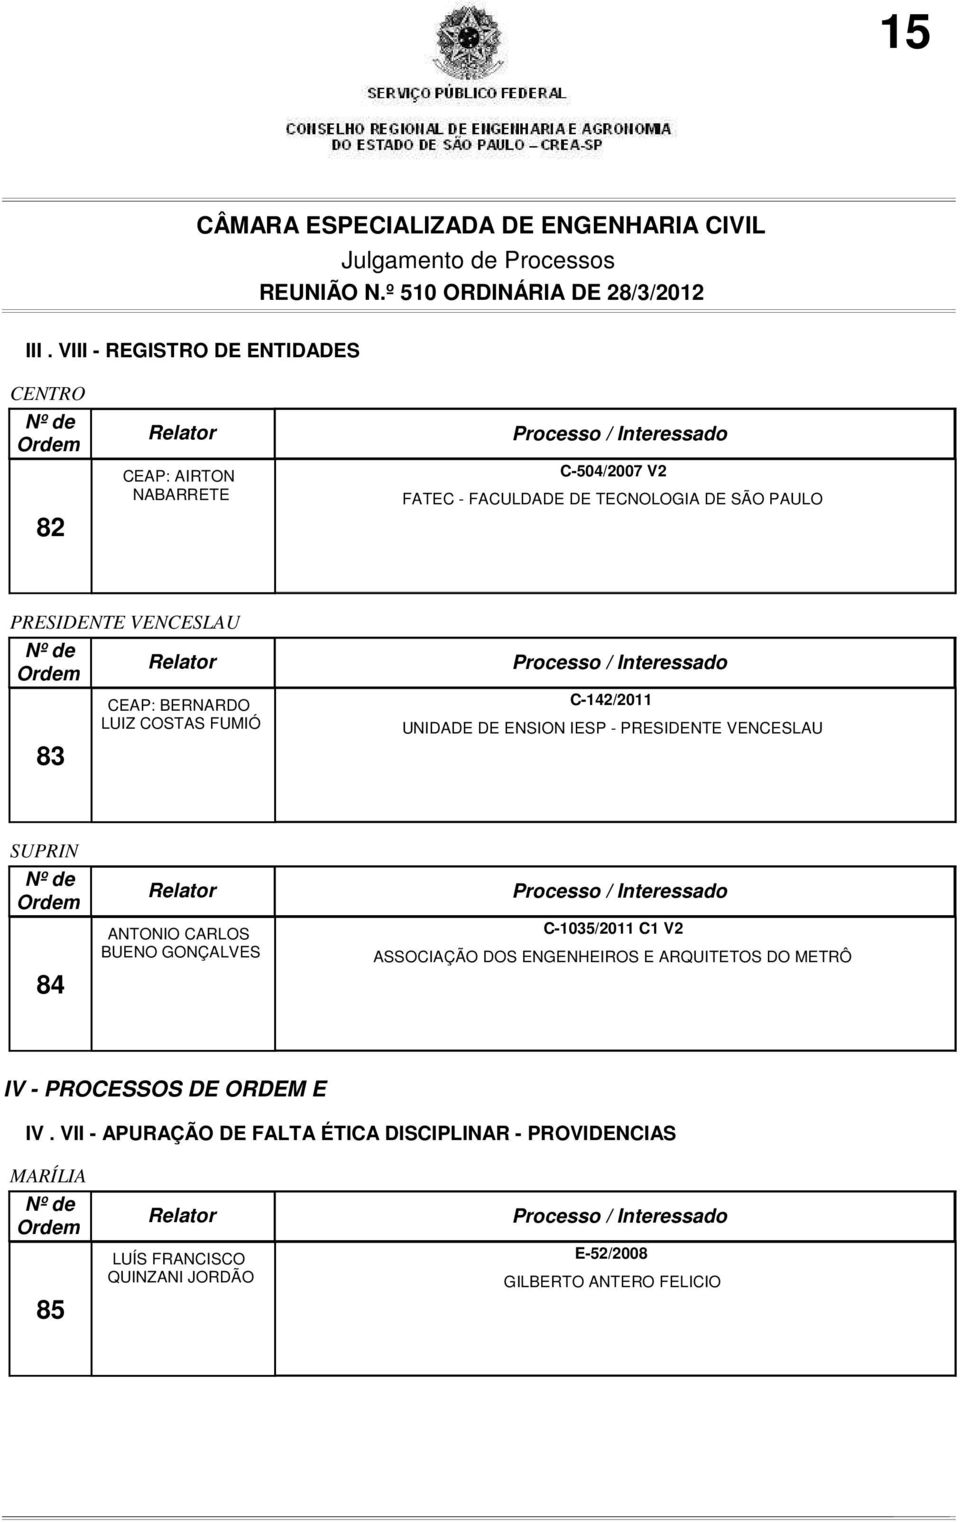 PRESIDENTE VENCESLAU 83 CEAP: BERNARDO LUIZ COSTAS FUMIÓ C-142/2011 UNIDADE DE ENSION IESP - PRESIDENTE VENCESLAU SUPRIN